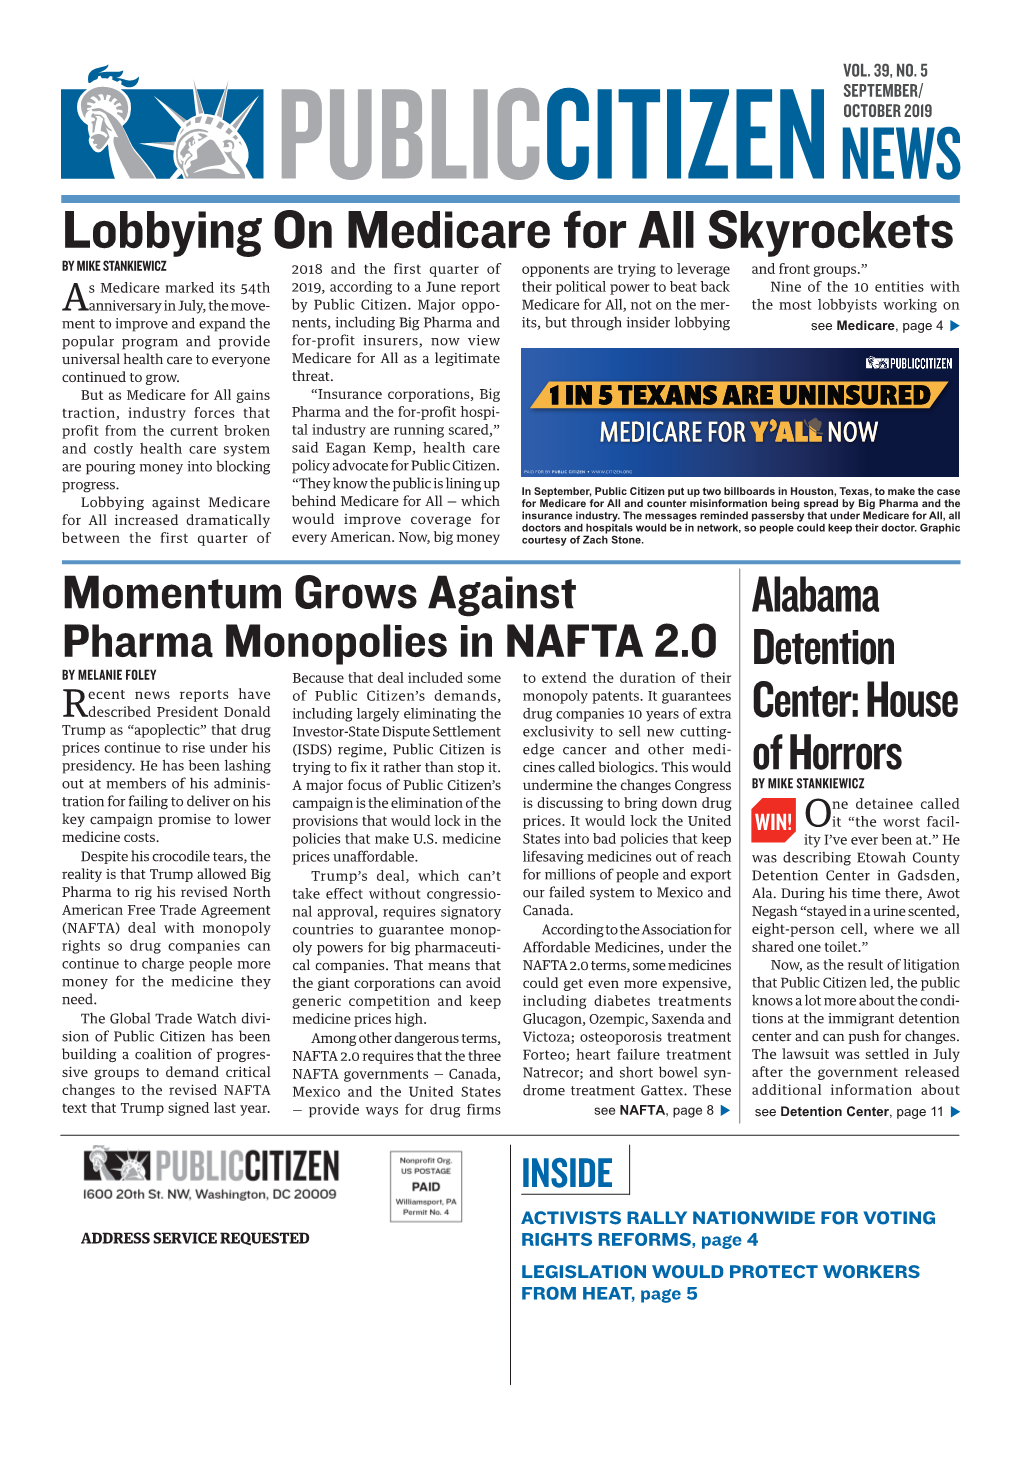 Lobbying on Medicare for All Skyrockets